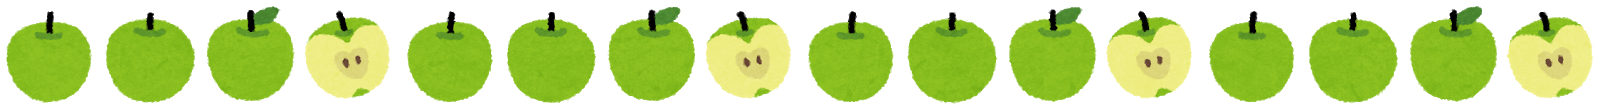 line_fruit_apple_green.png